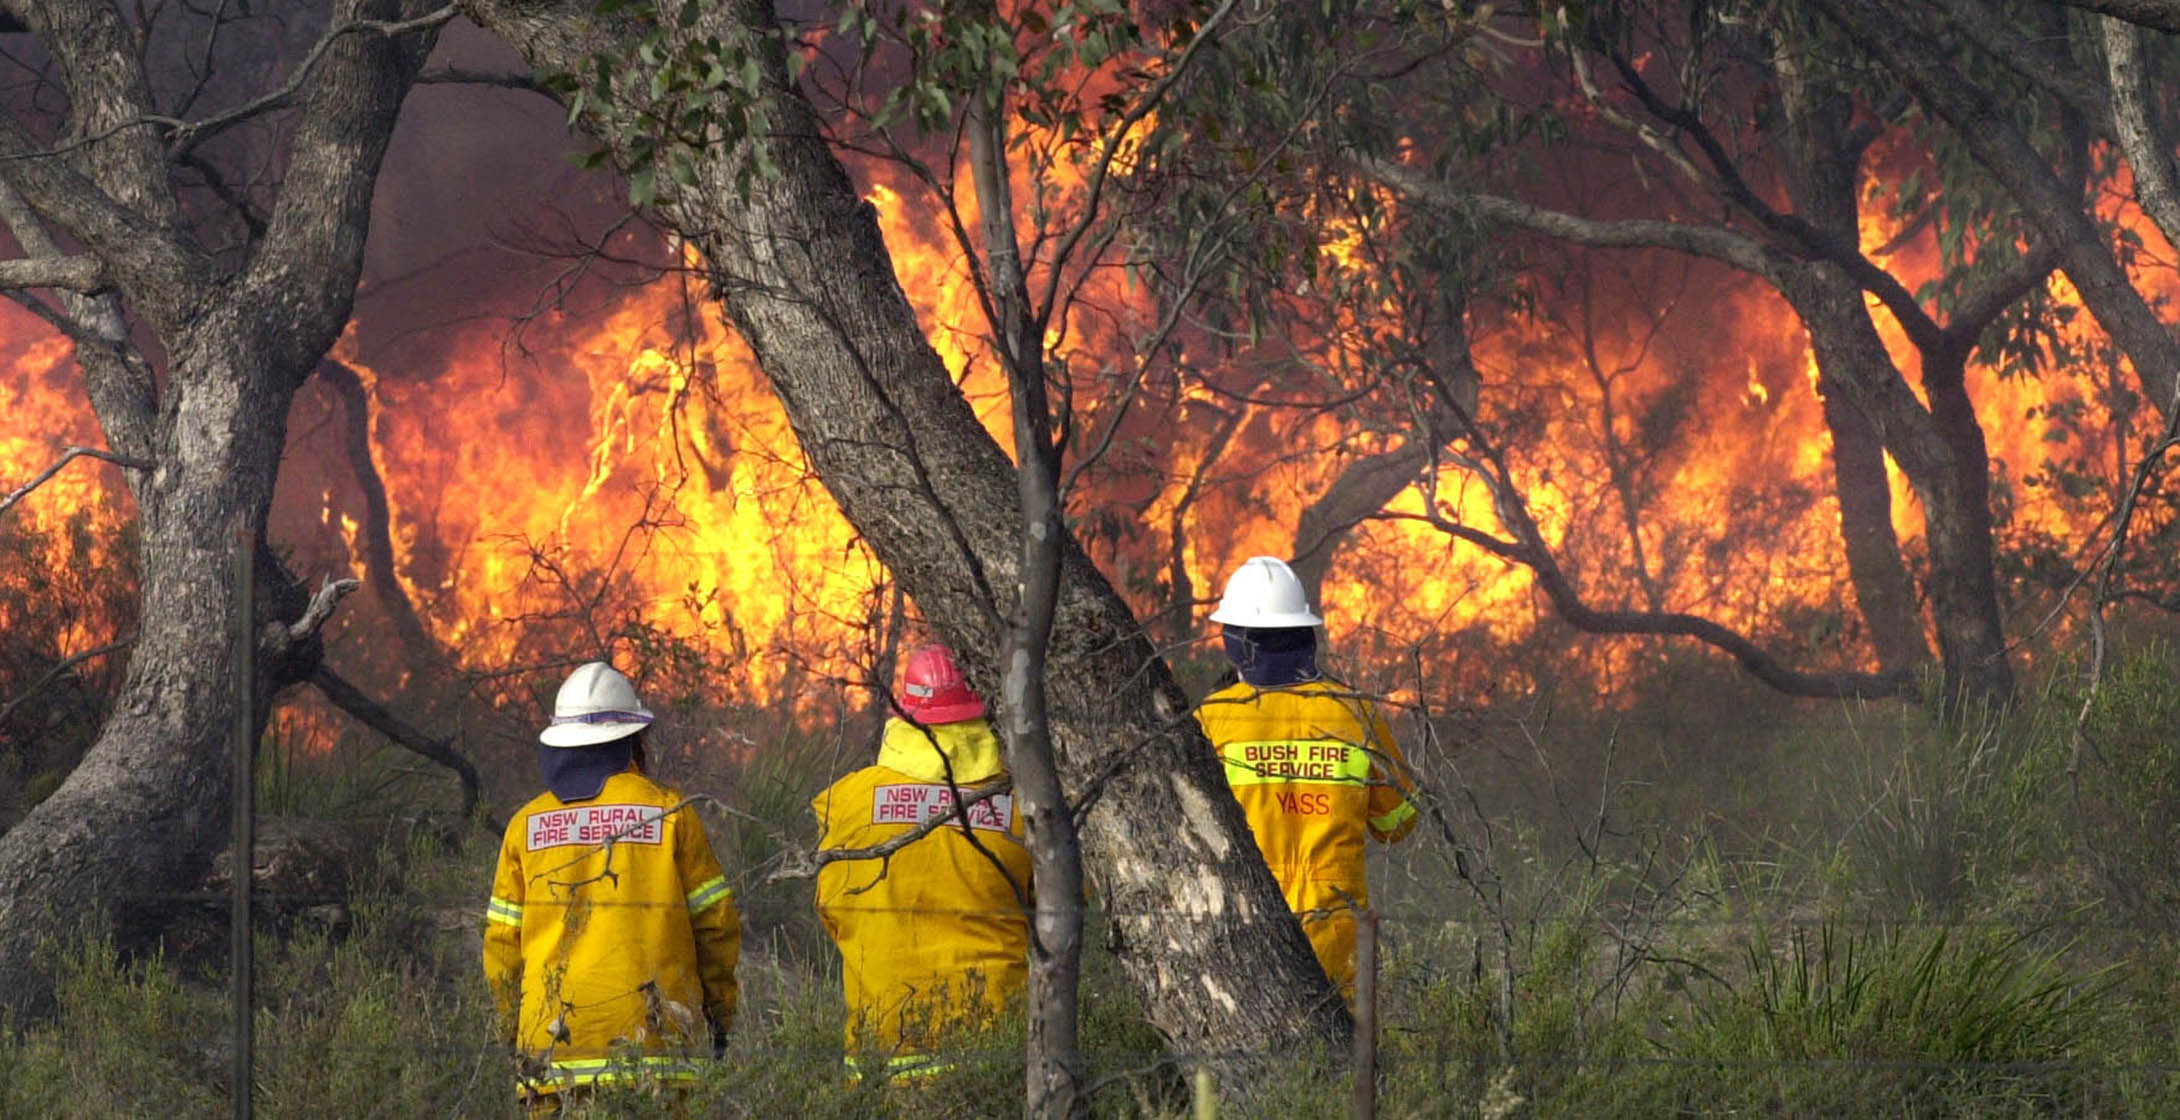 Firefighters in front of a bushfire